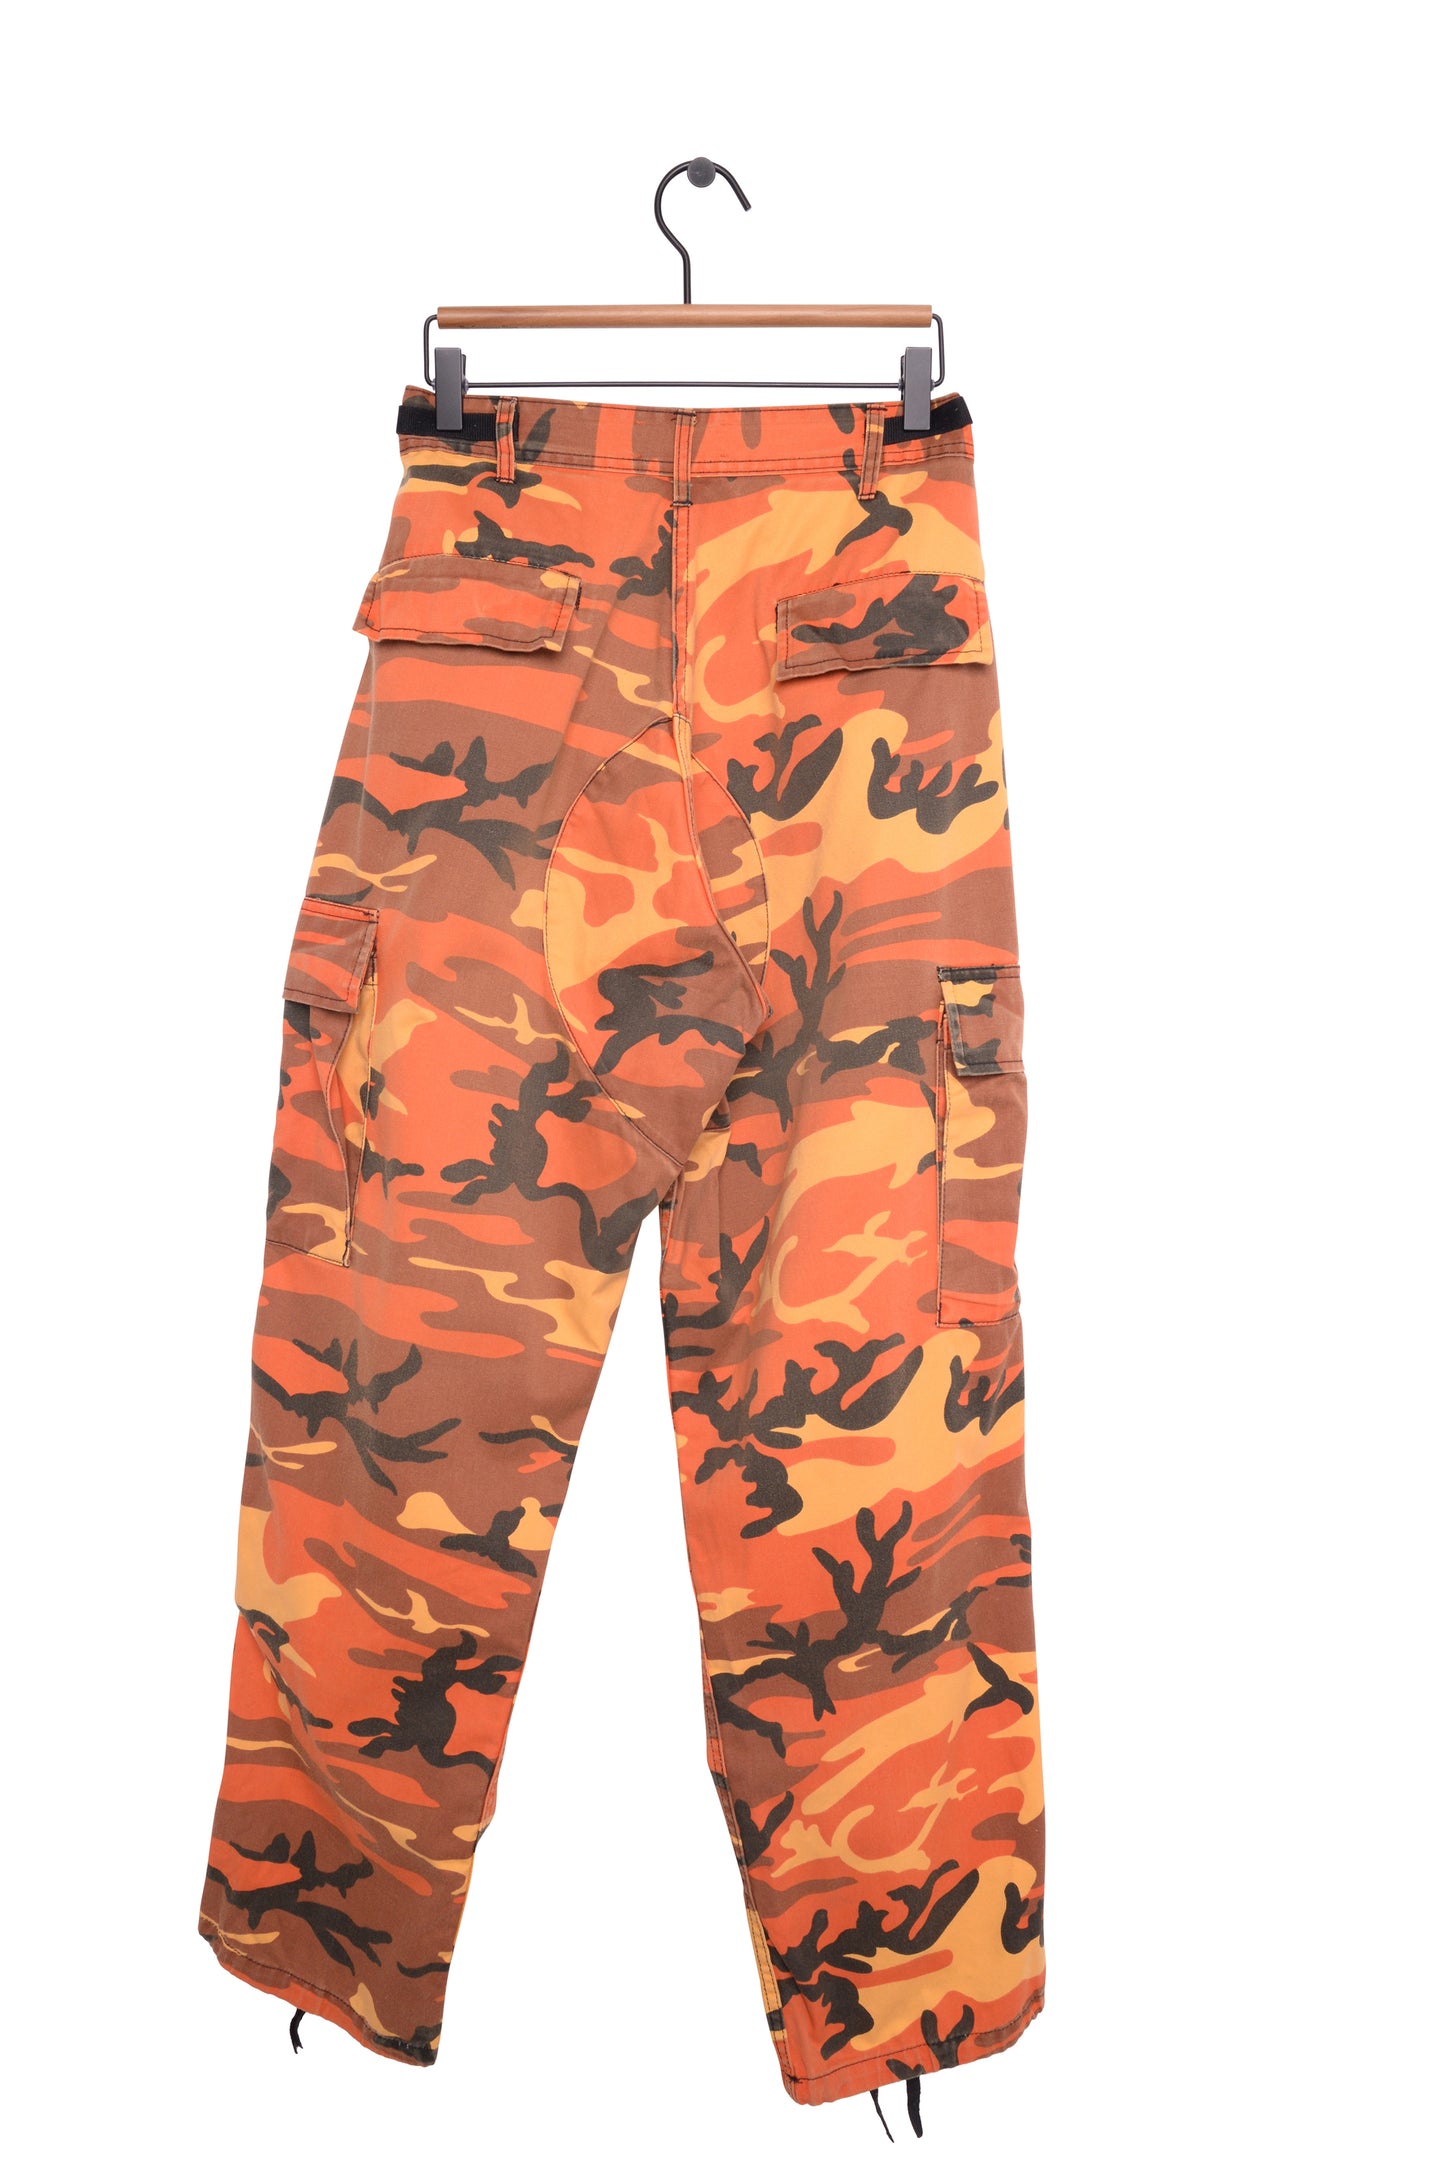 Faded Orange Camo Pants